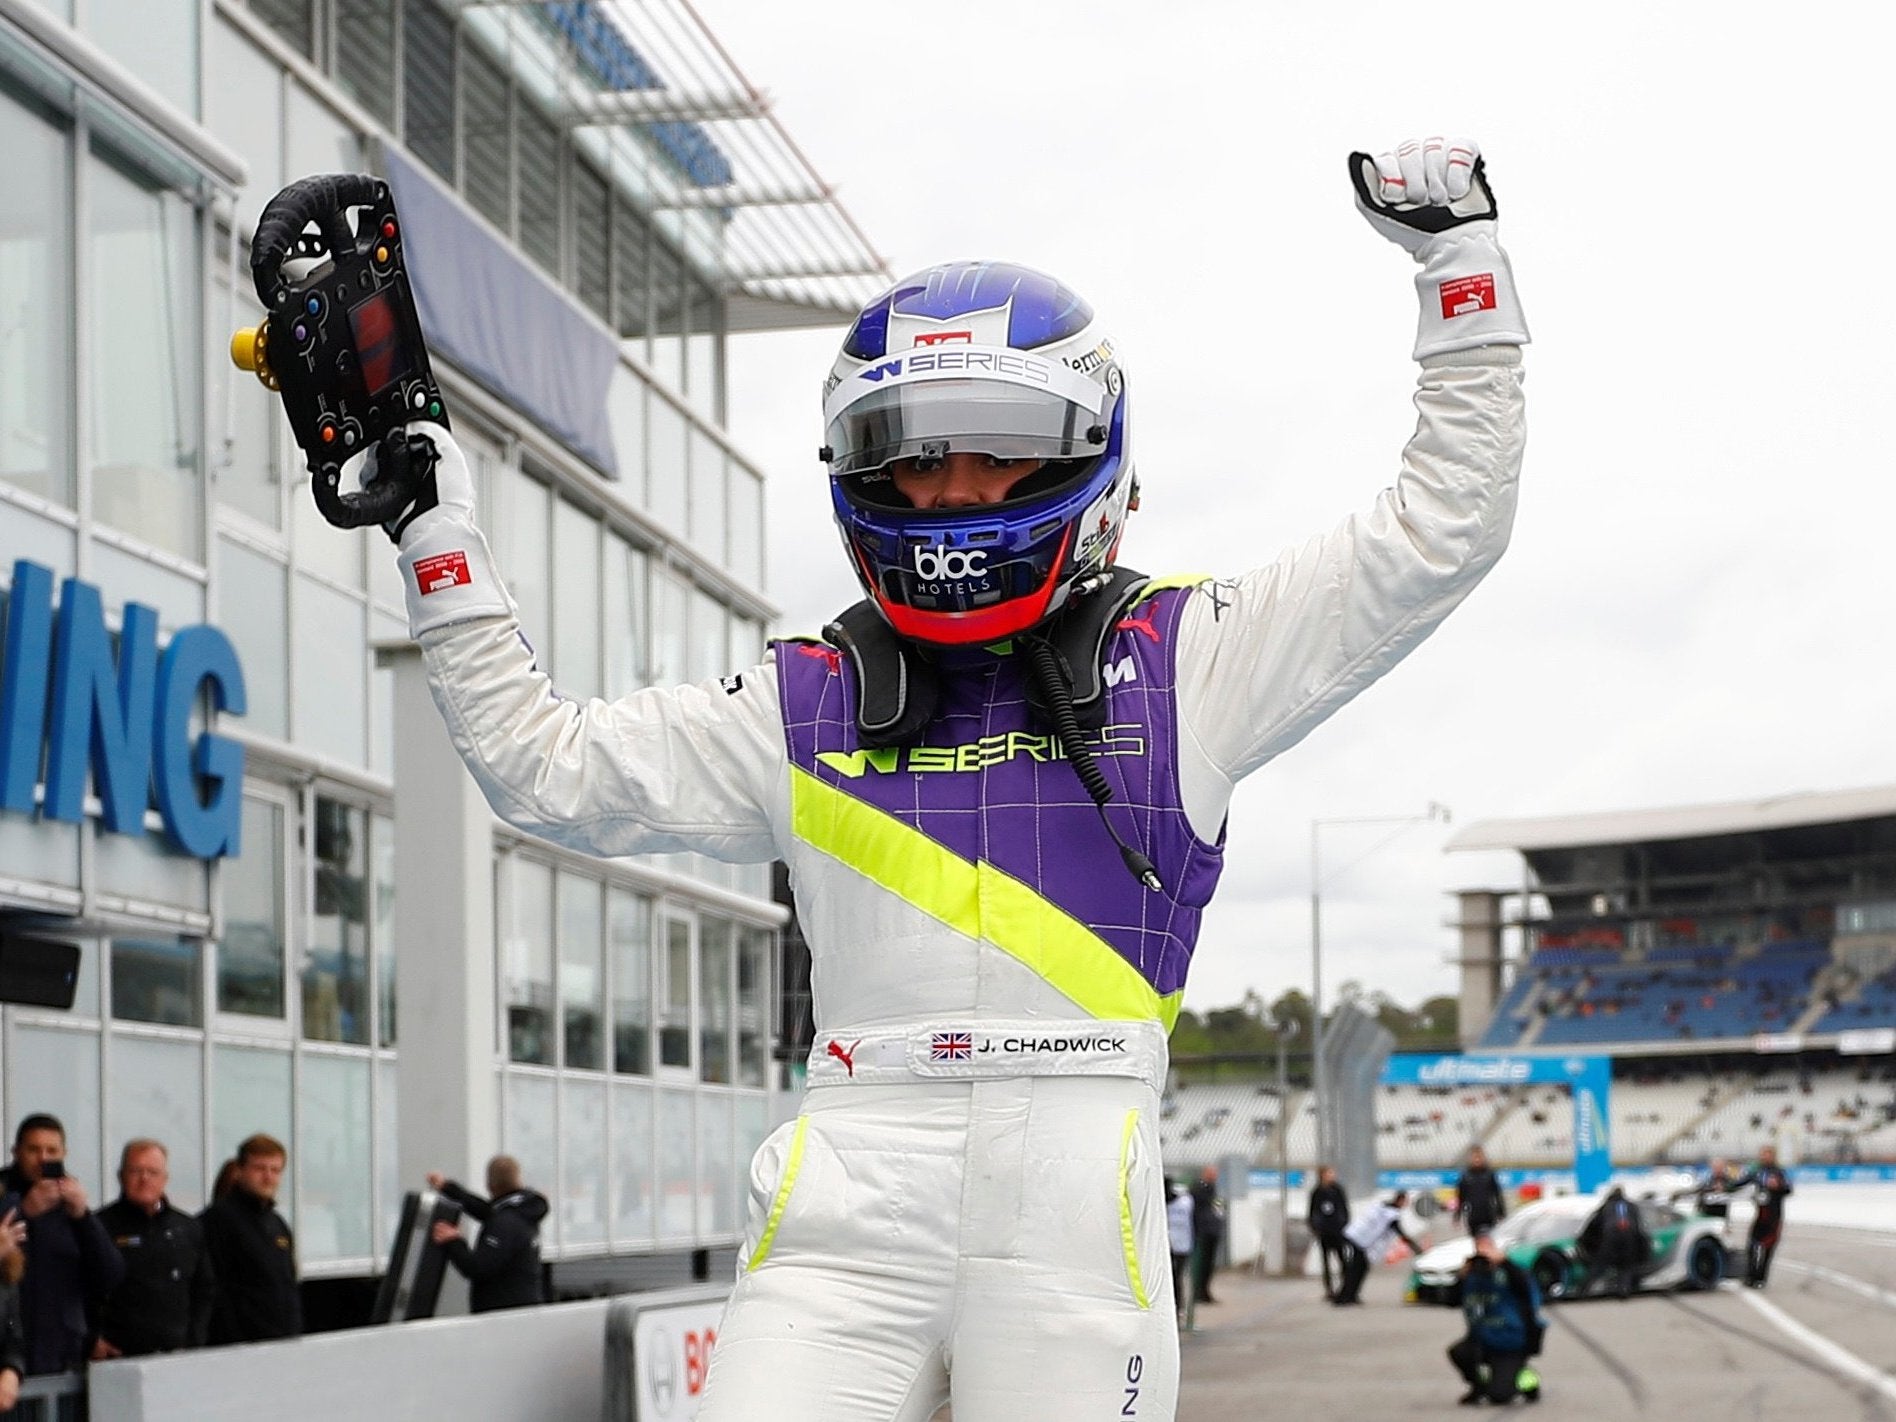 Chadwick celebrates becoming the first W Series race winner at Hockenheim